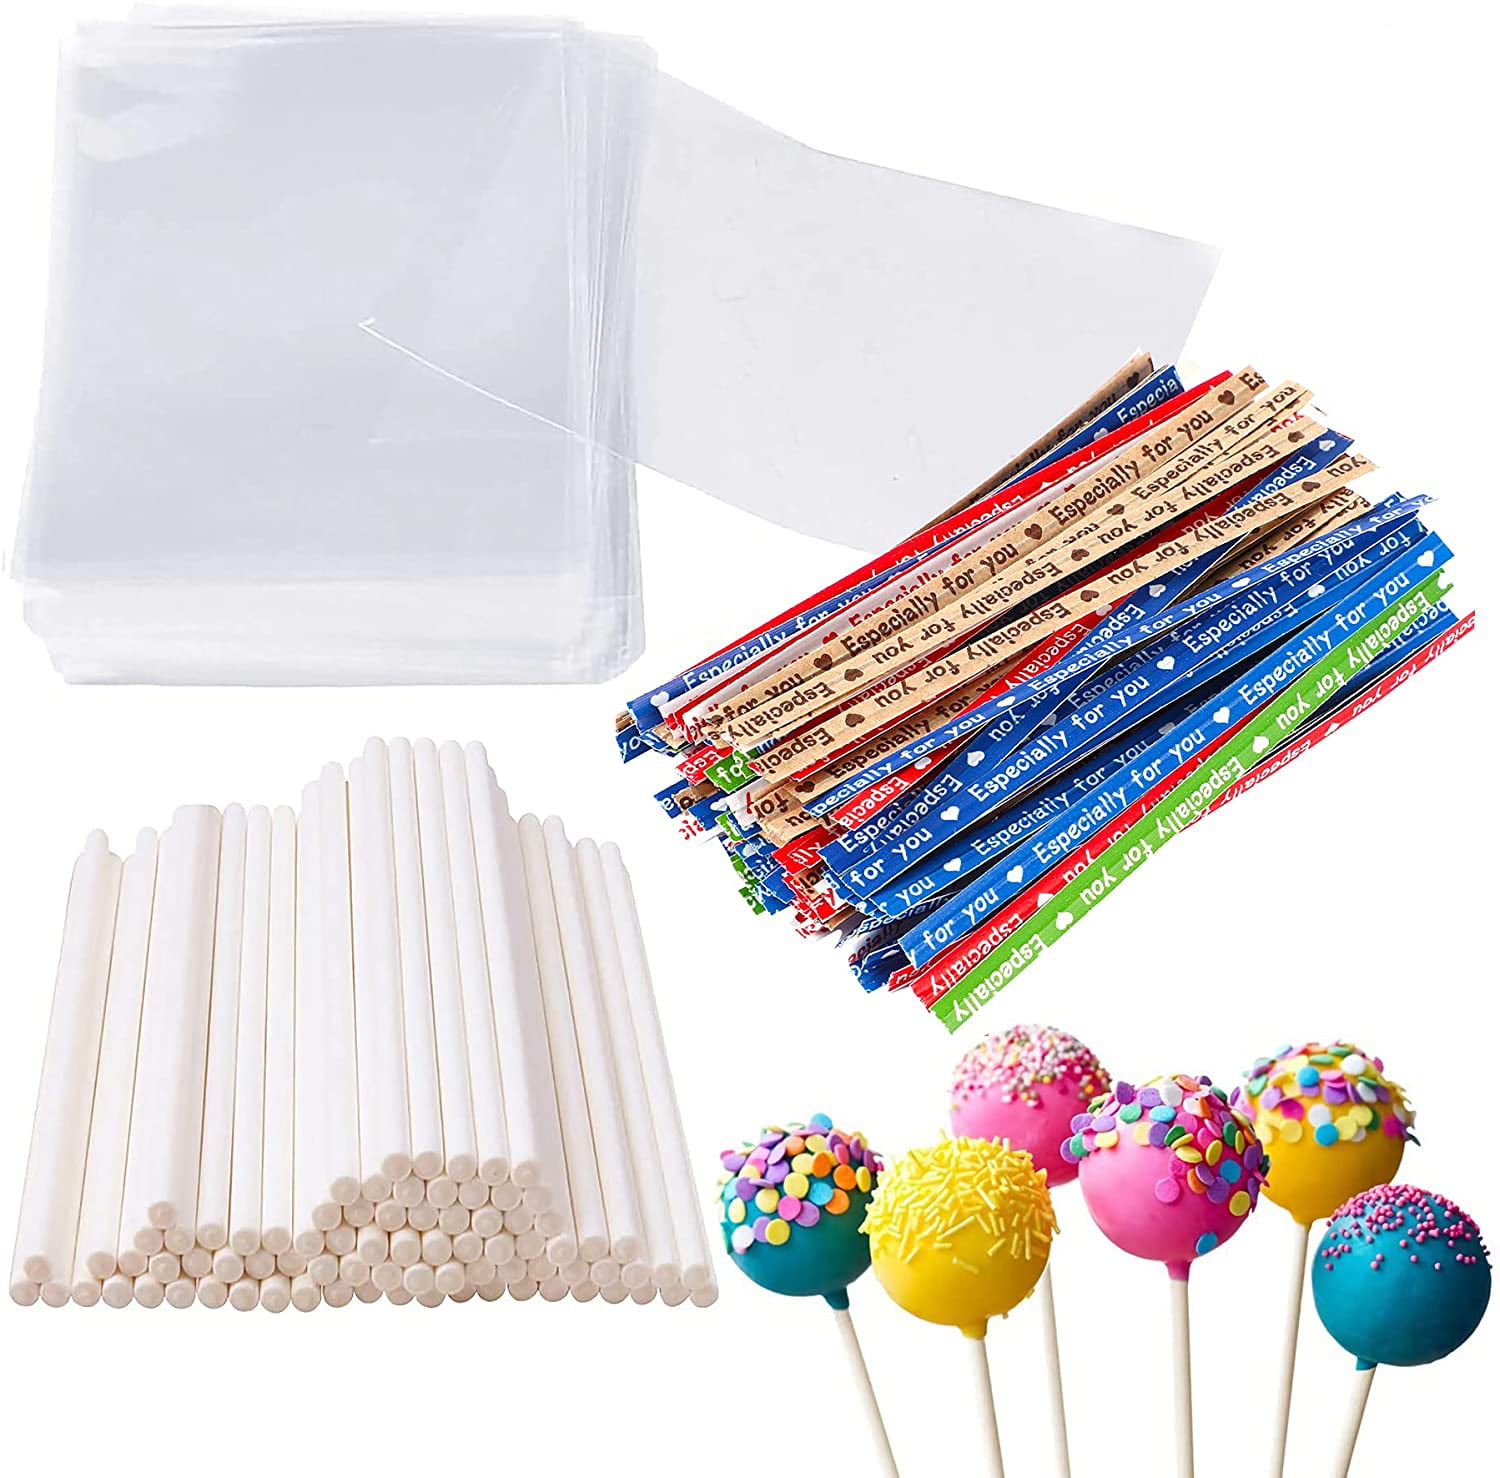 100pcs 6" x 5/32" lollipop sticks for cake pops Special offer only QTY 20 